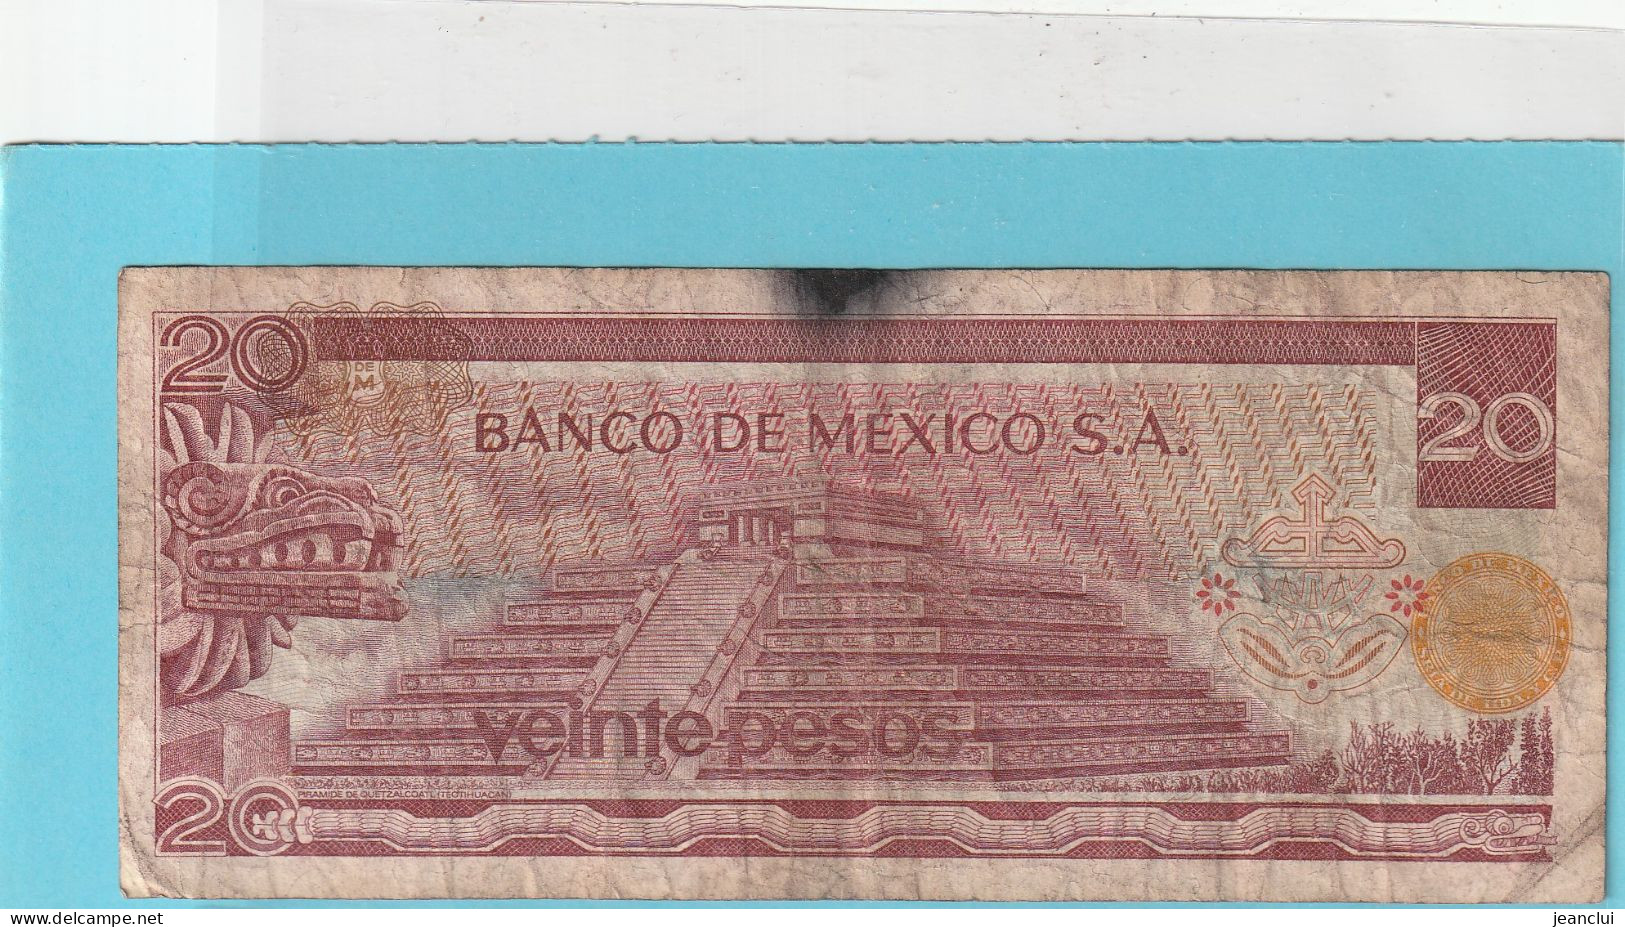 EL BANCO DE MEXICO S.A.   .  20 PESOS  .  18-7-1973  .  N°  L 8388428 .  2 SCANNES  .  BILLET TRES USITE - Messico